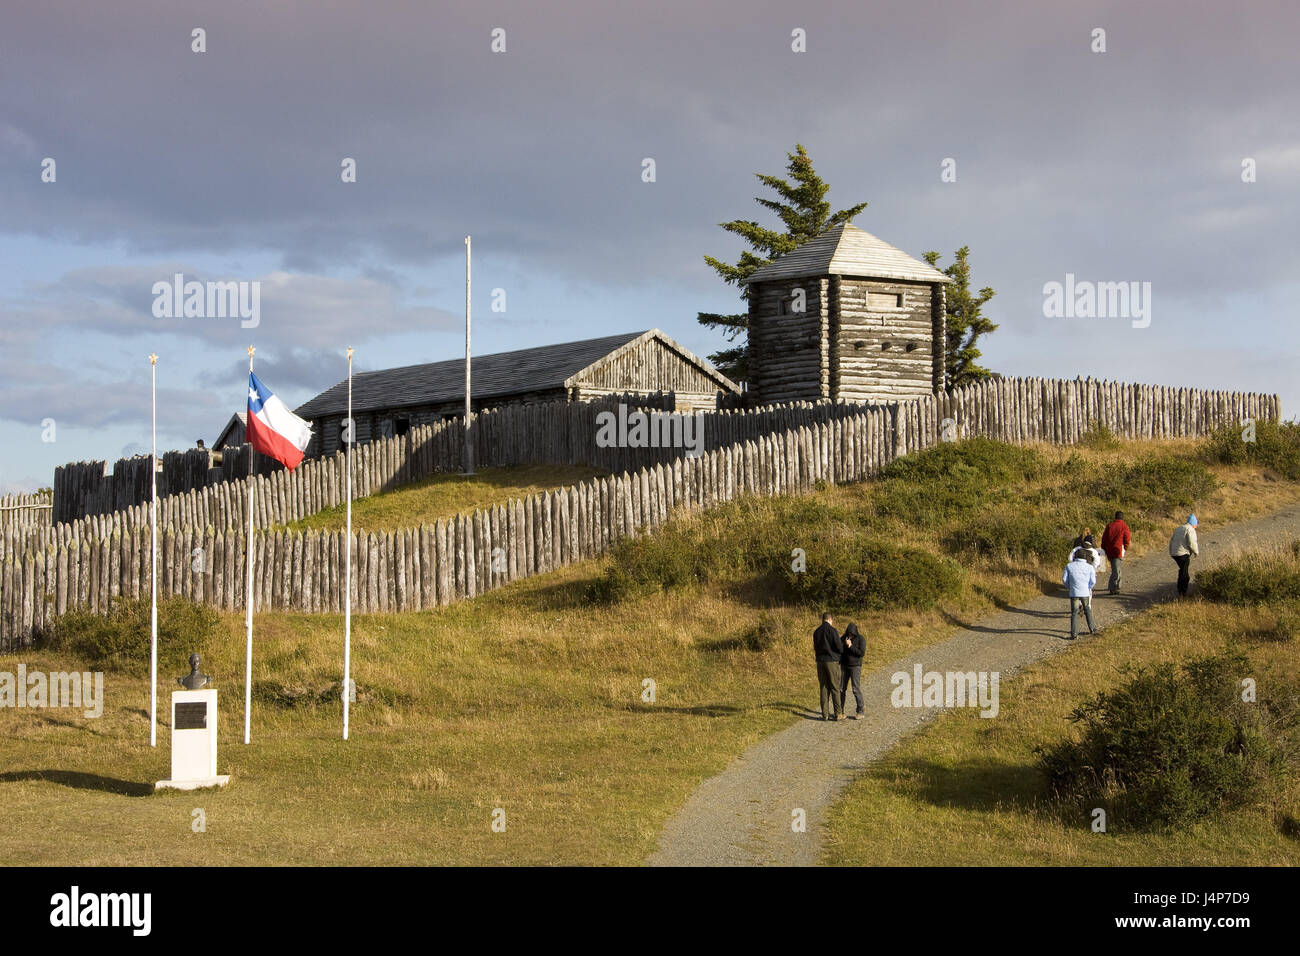 Chile, Patagonia, Punta Arenas, Fuerte Bulnes, timber houses, tourists, Stock Photo